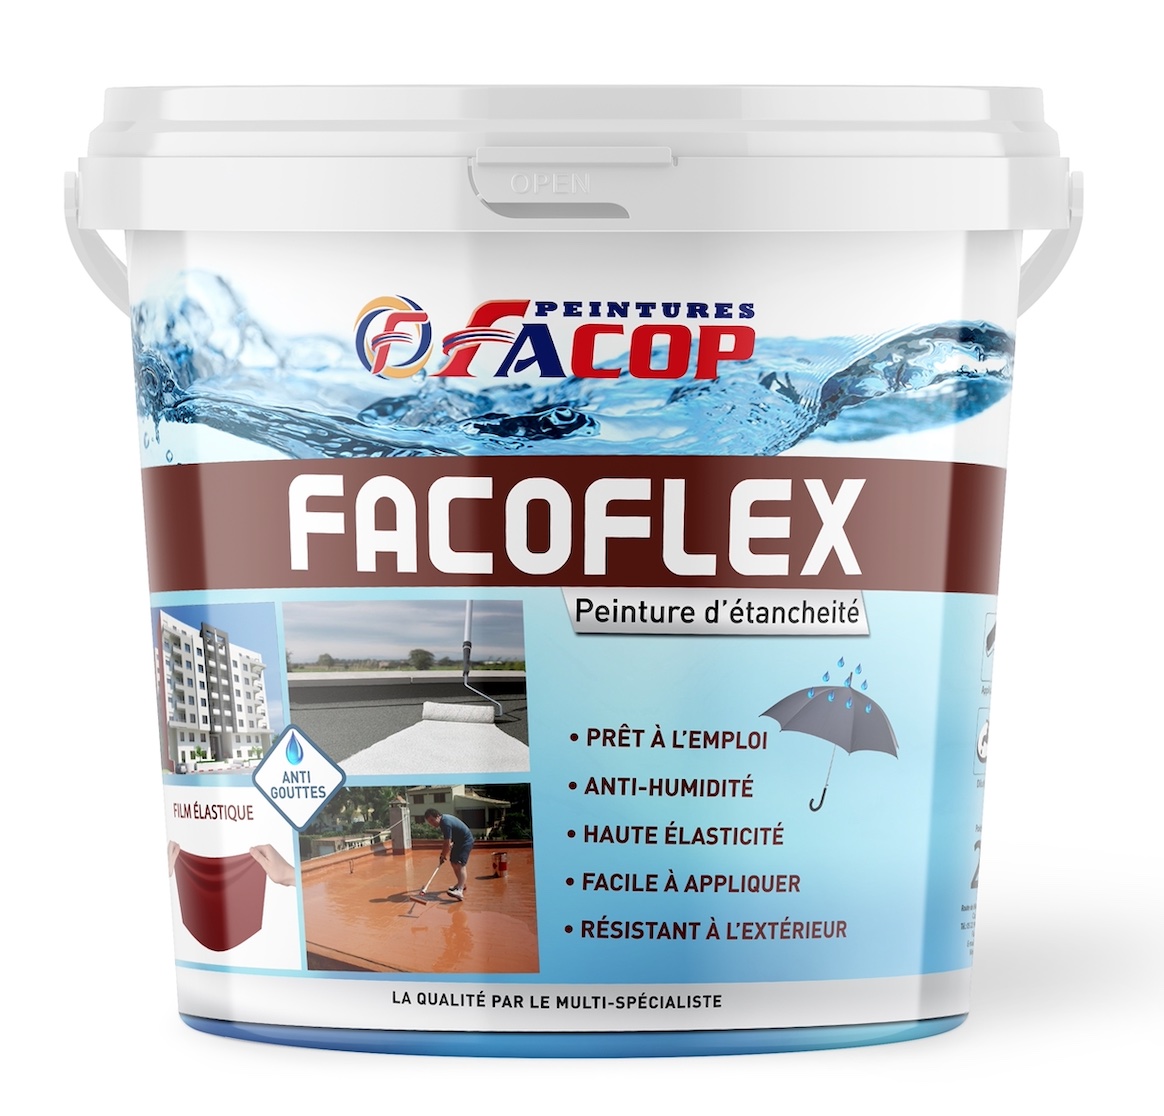 Facoflex